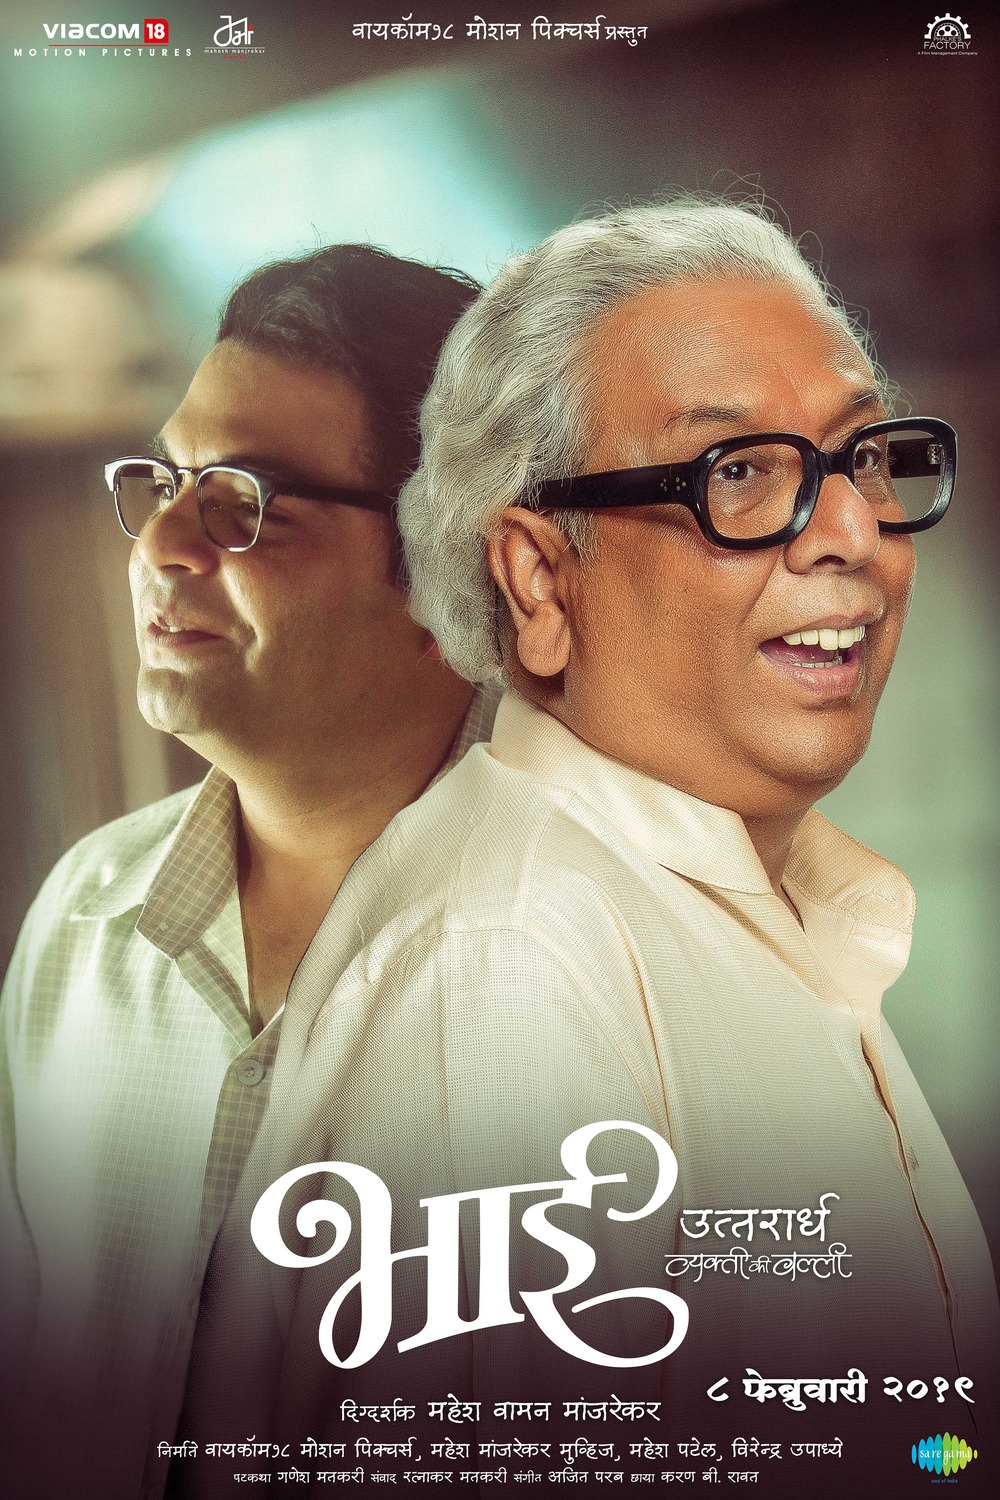 Extra Large Movie Poster Image for Bhai - Vyakti Ki Valli (#5 of 6)